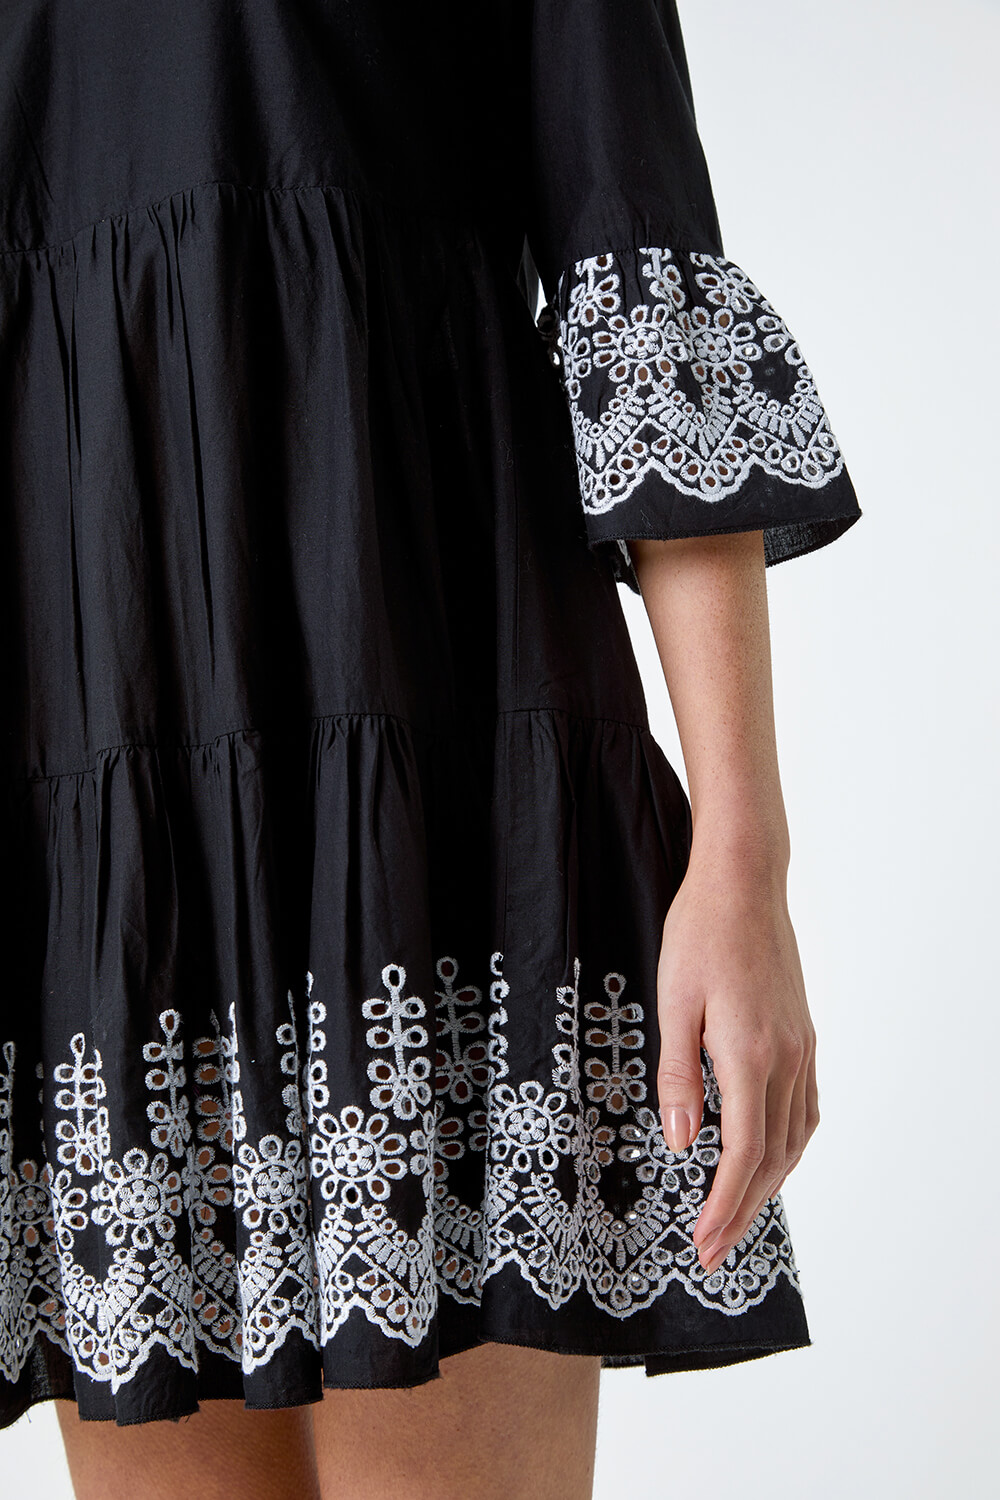 Black Embroidered Cotton Smock Dress, Image 5 of 5